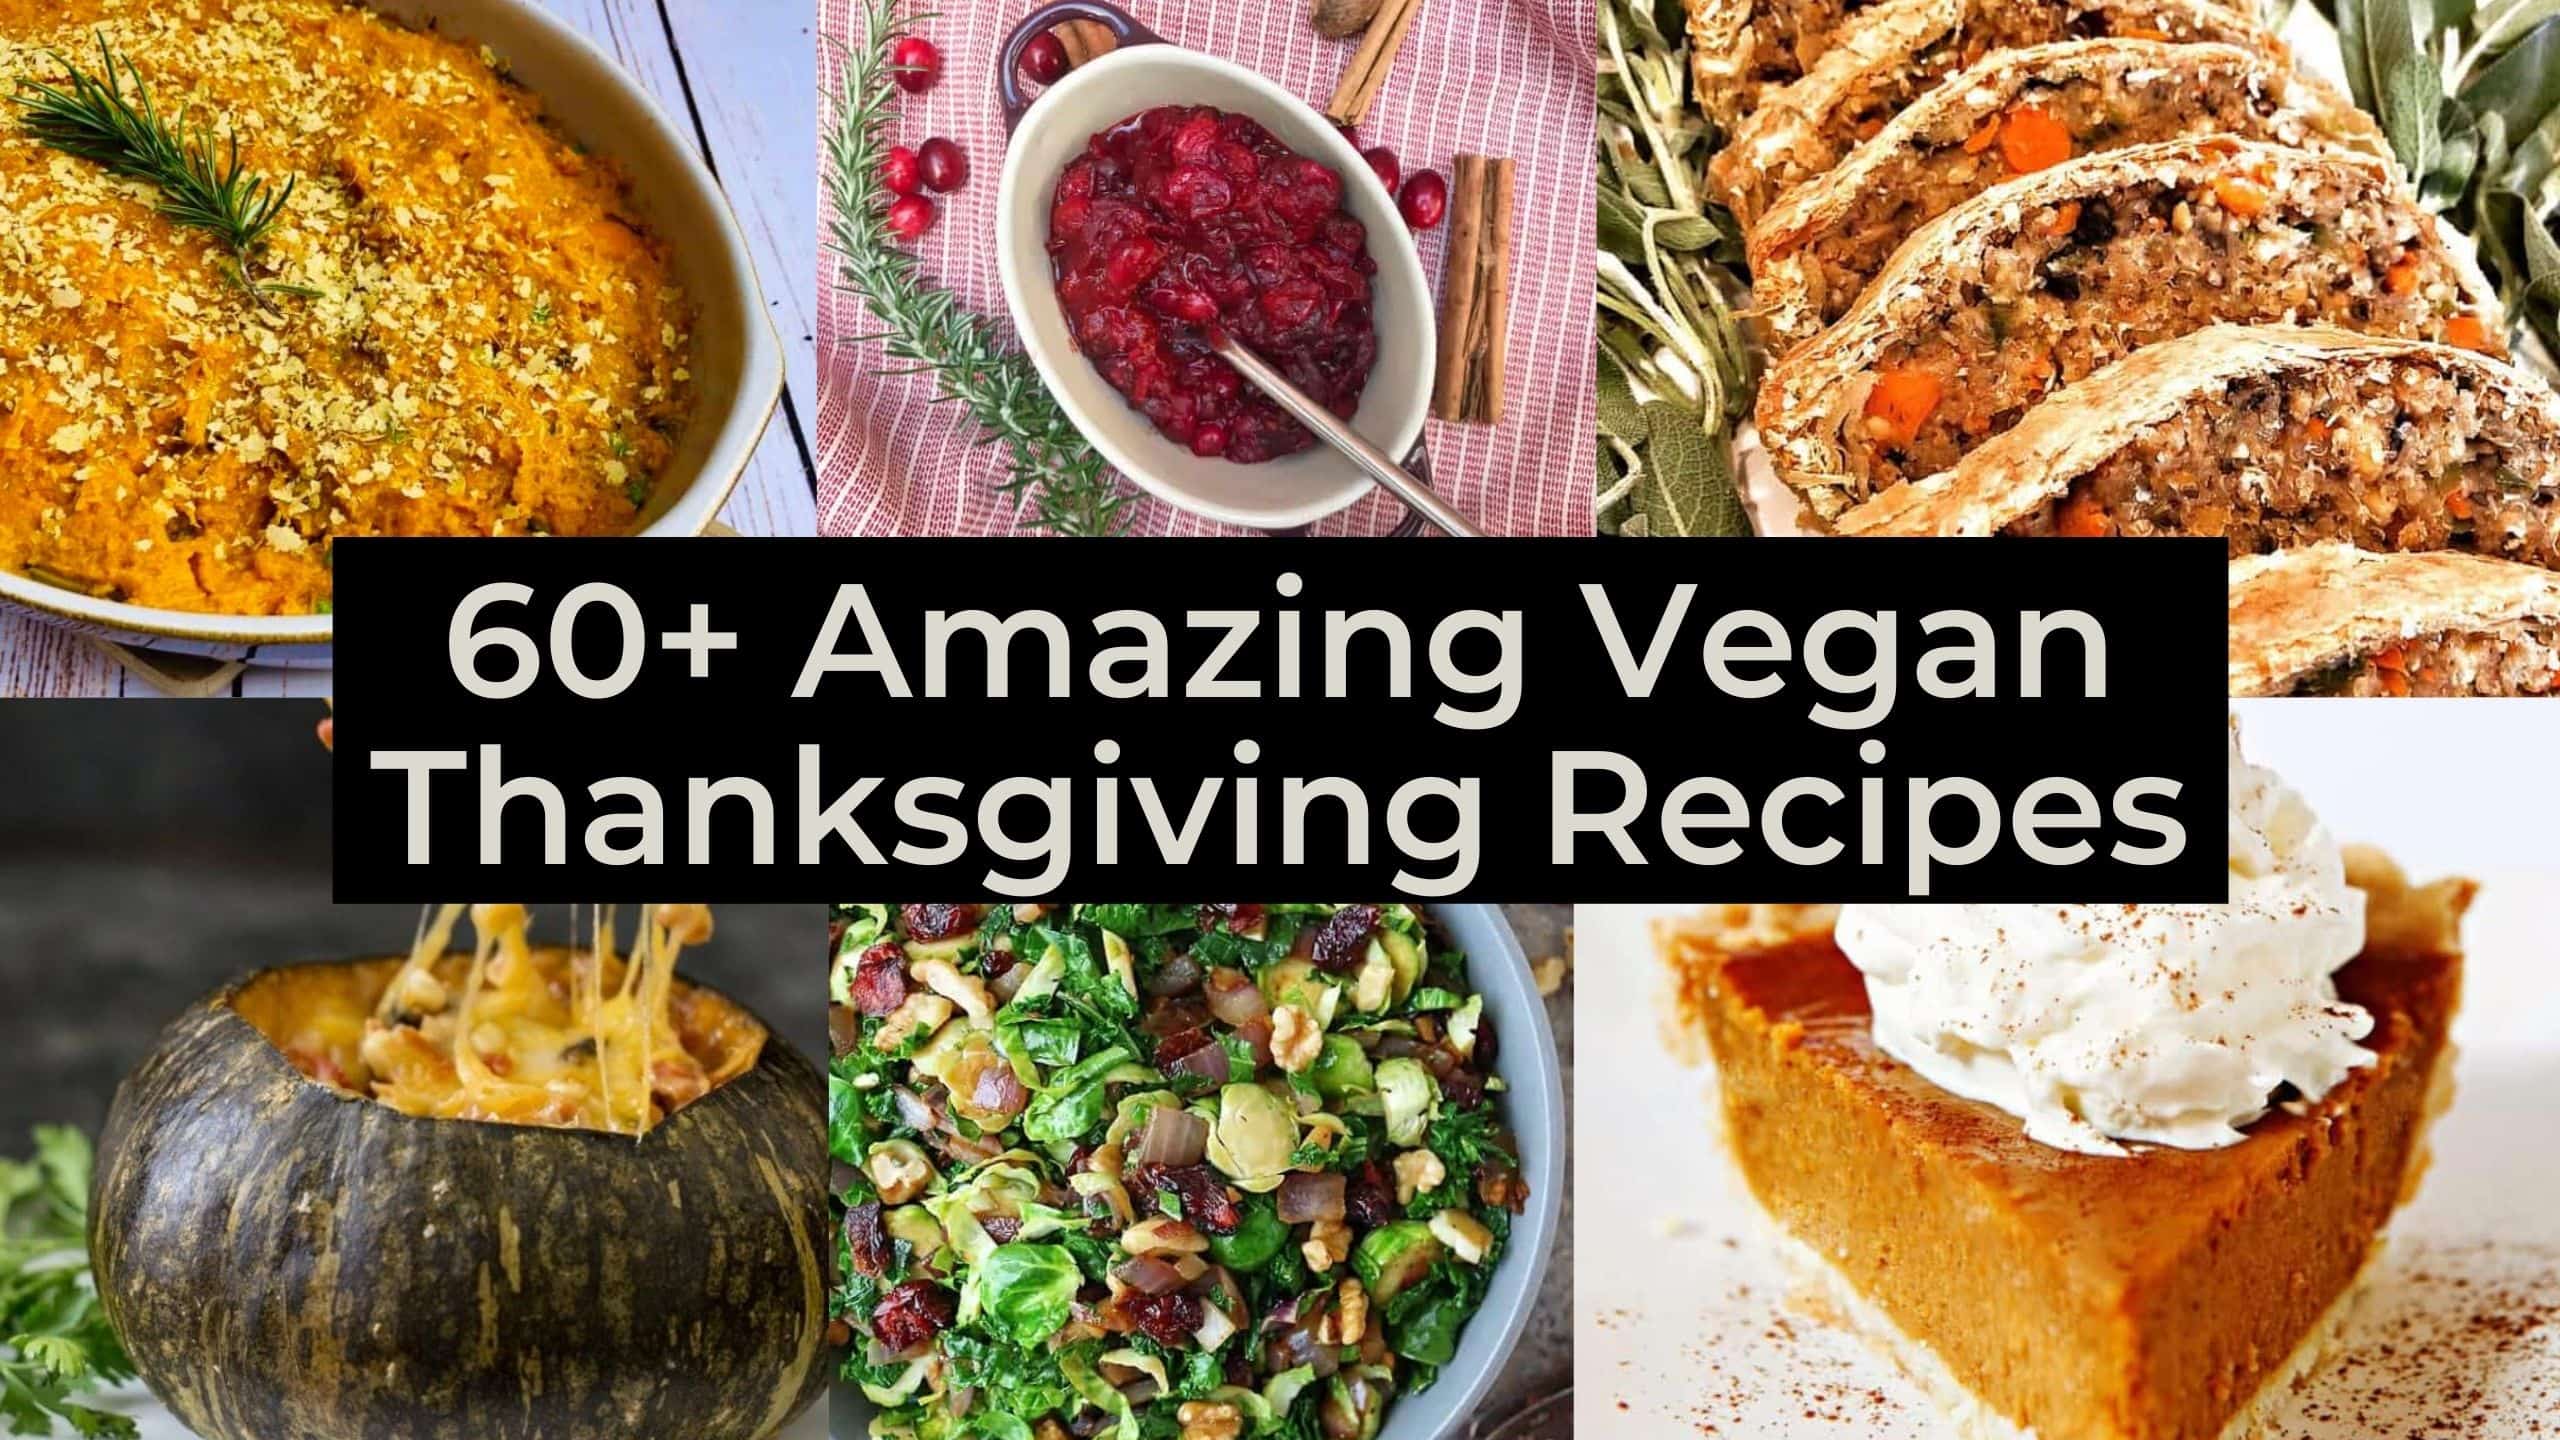 vegan thanksgiving recipes